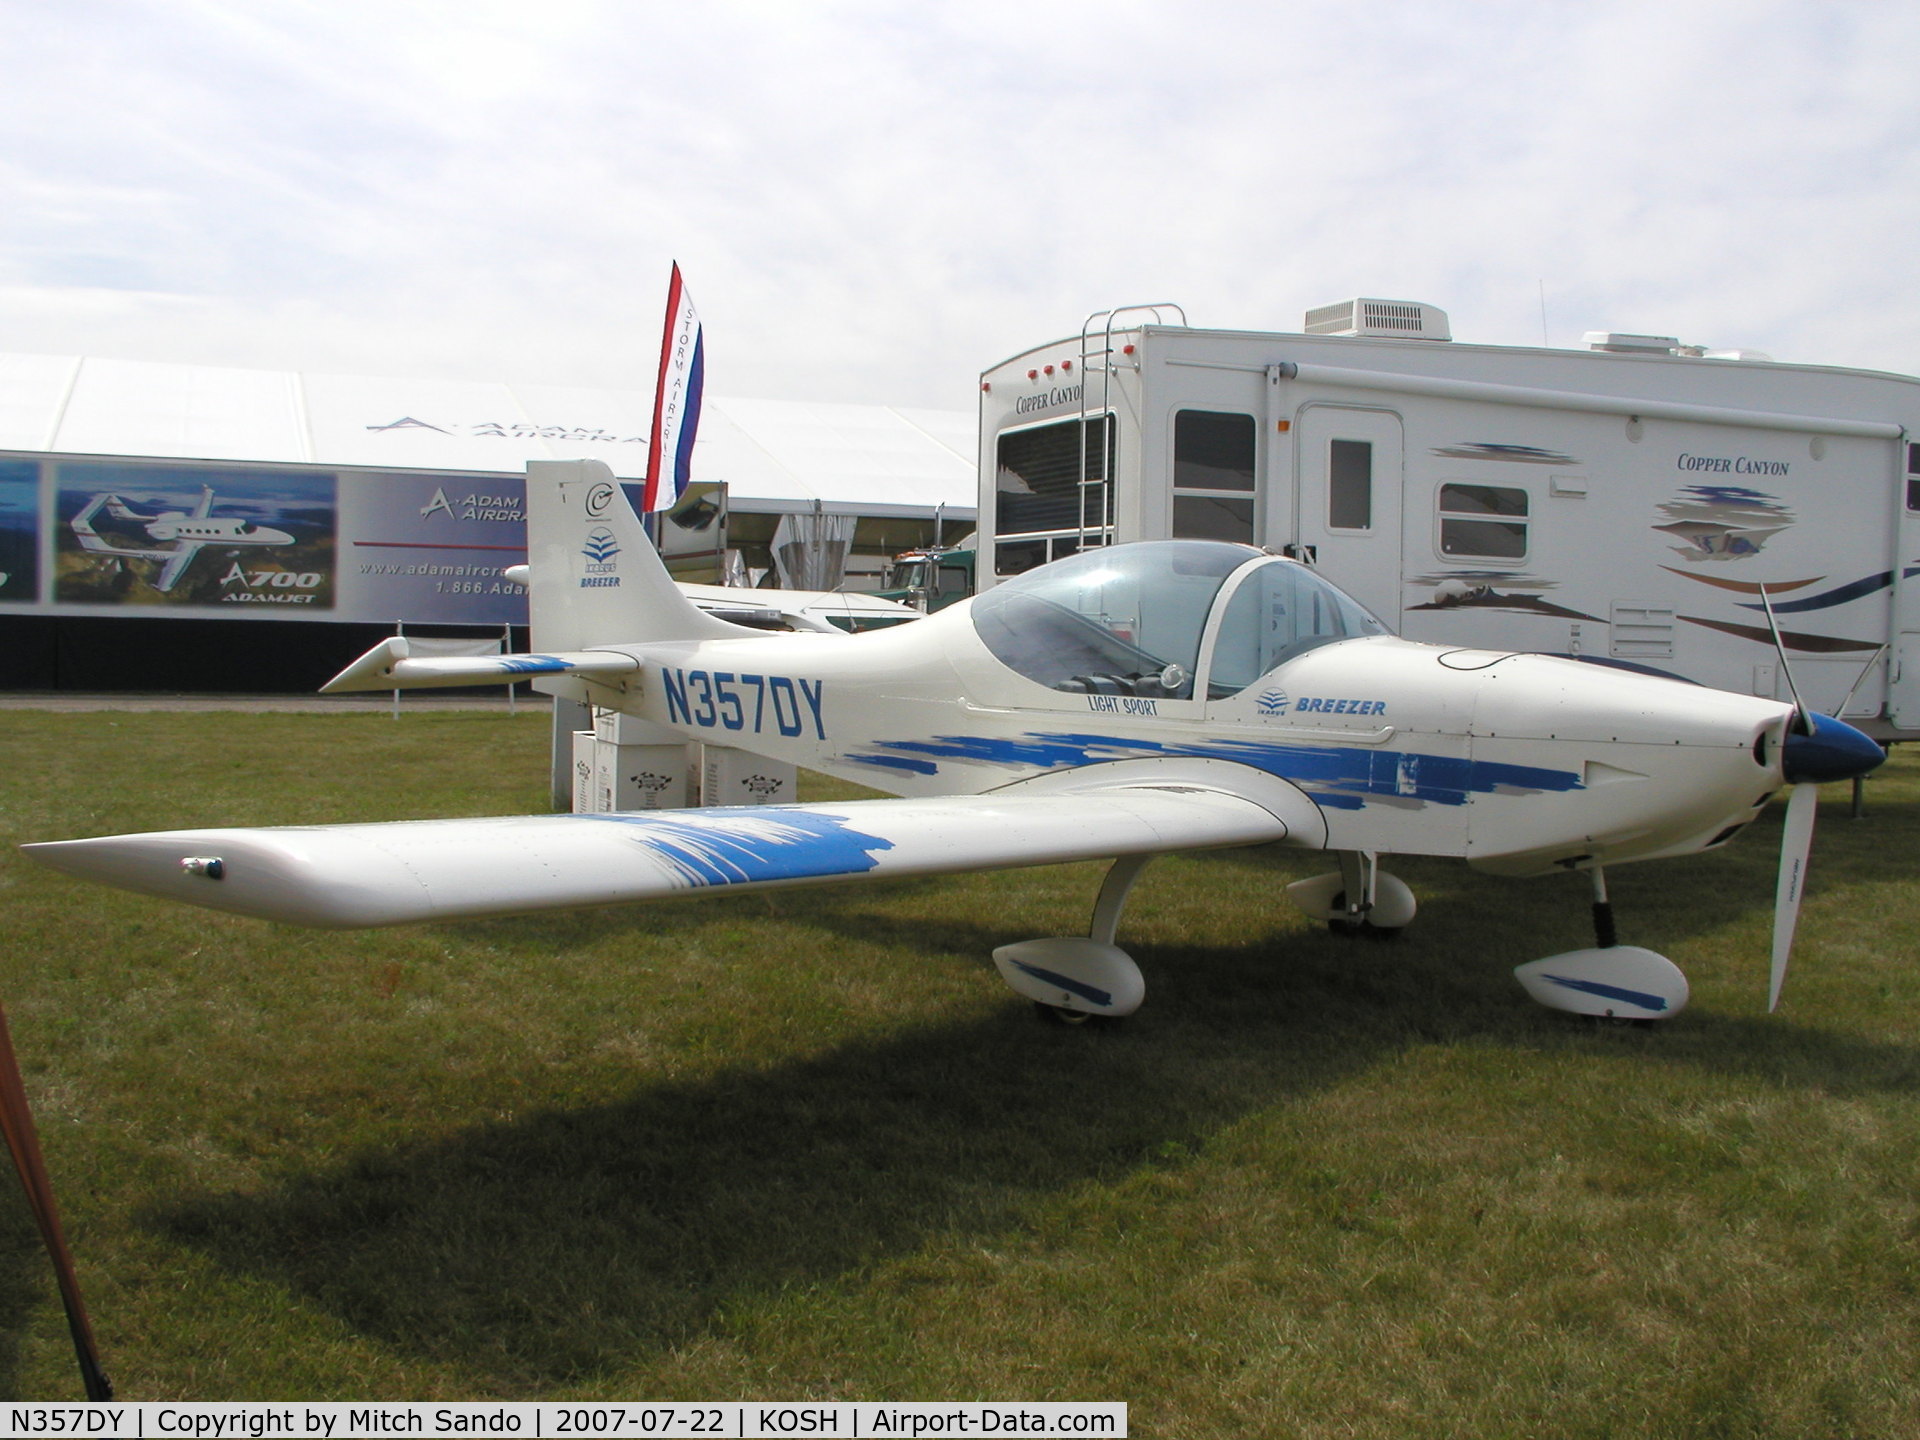 N357DY, 2005 Aerostyle Breezer C/N 046, EAA AirVenture 2007.